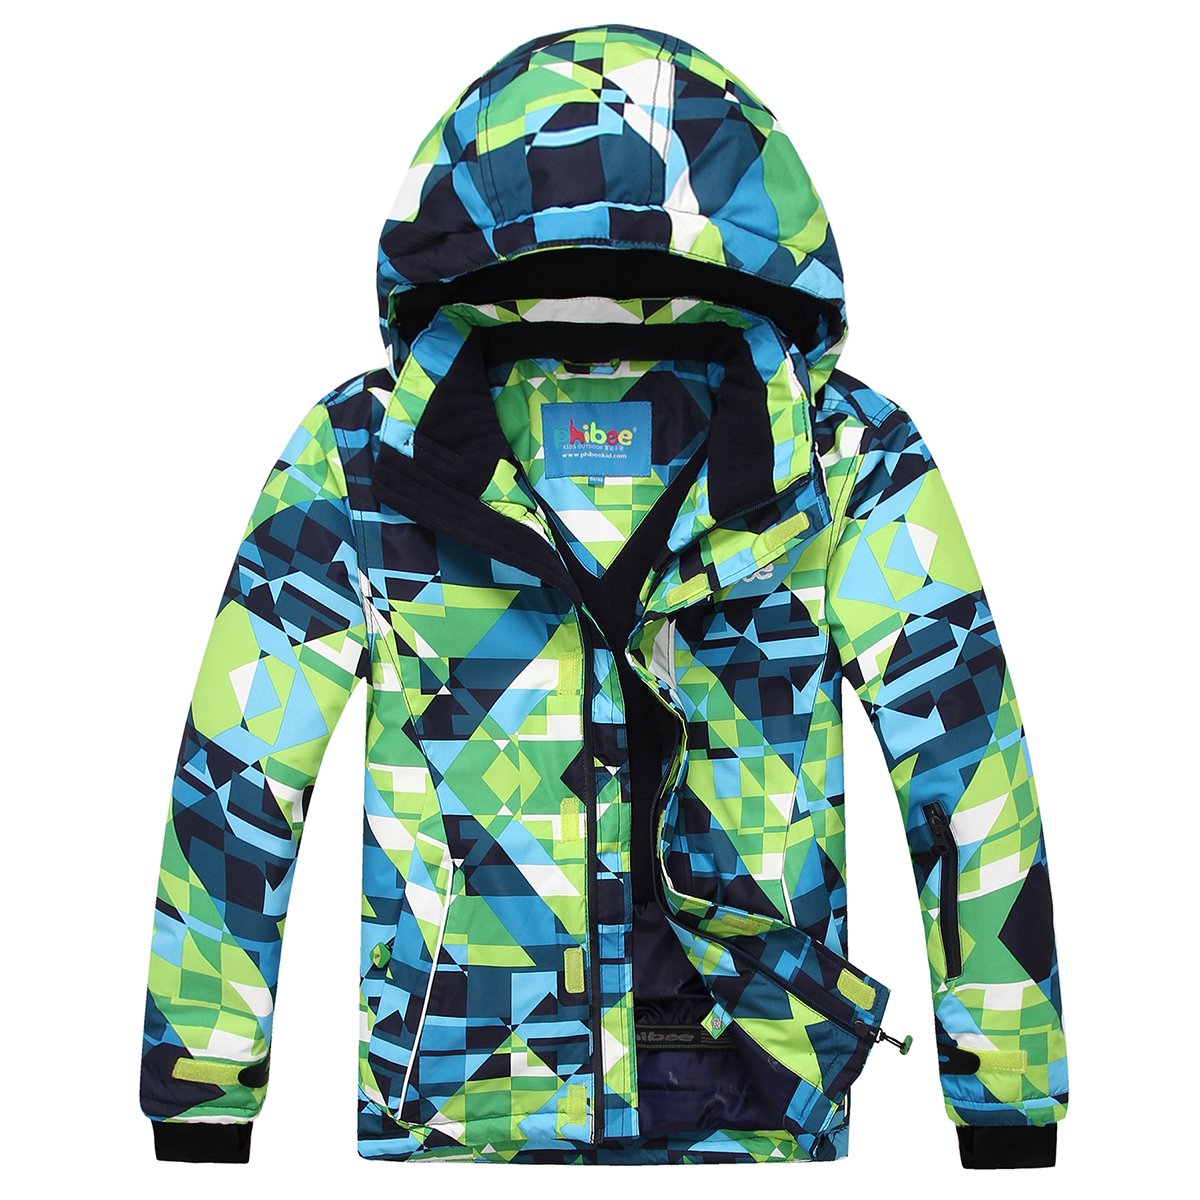 PHIBEE Big Boy's Waterproof Breathable Snowboard Ski Jacket Size 8